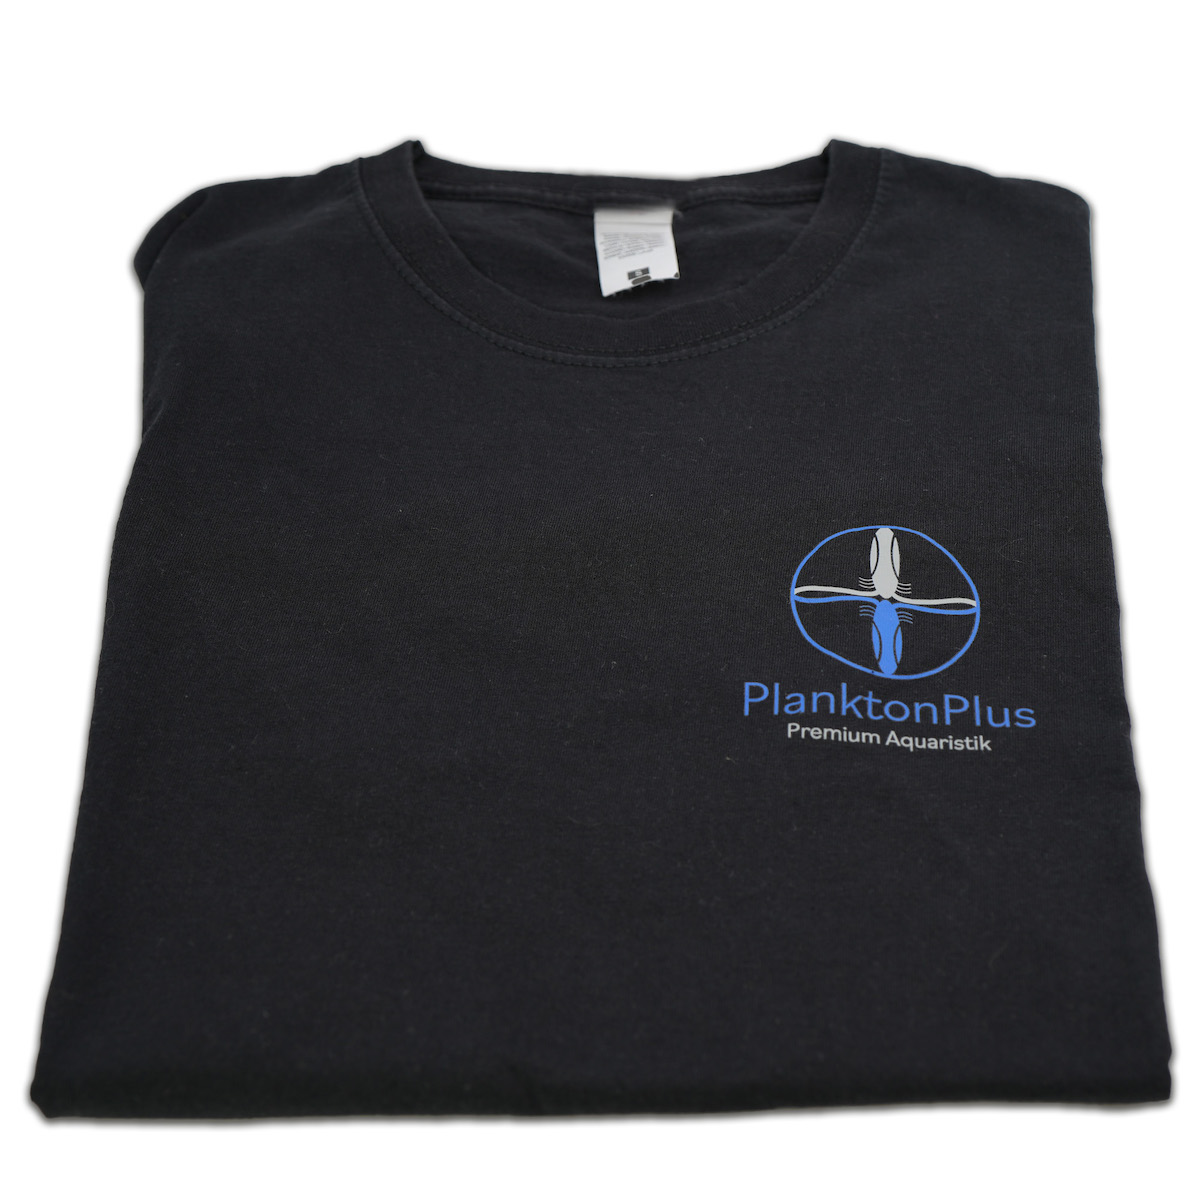 PlanktonPlus Aquaristik T-Shirt Basic schwarz - Größe M